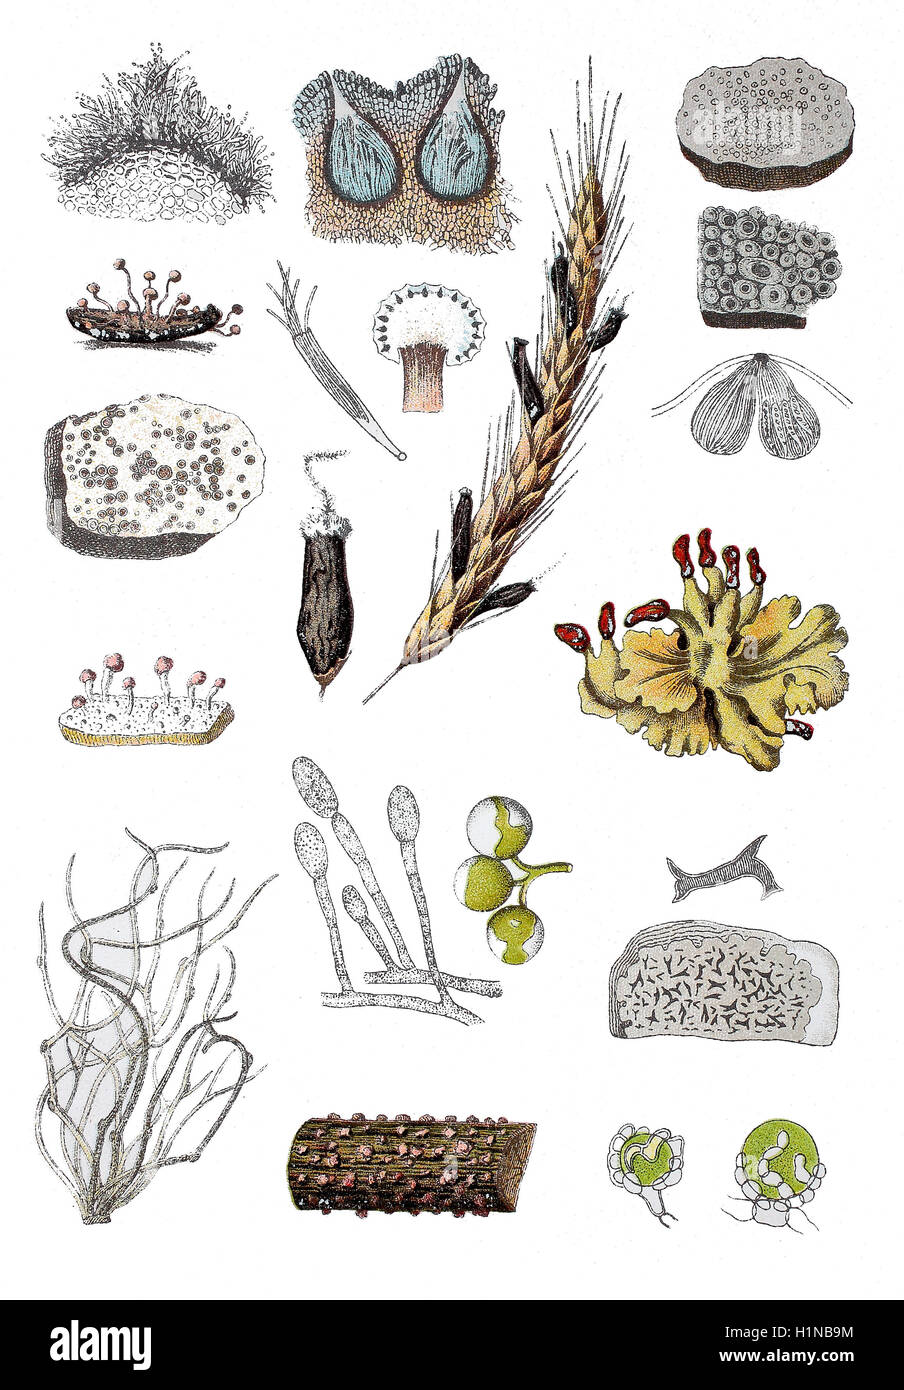 coral spot, Nectria cinnabarina (bottem center), Lichen, Peltigera polydactyla (center right), Claviceps ergot fungus, Claviceps purpurea (center bis left top), Stock Photo